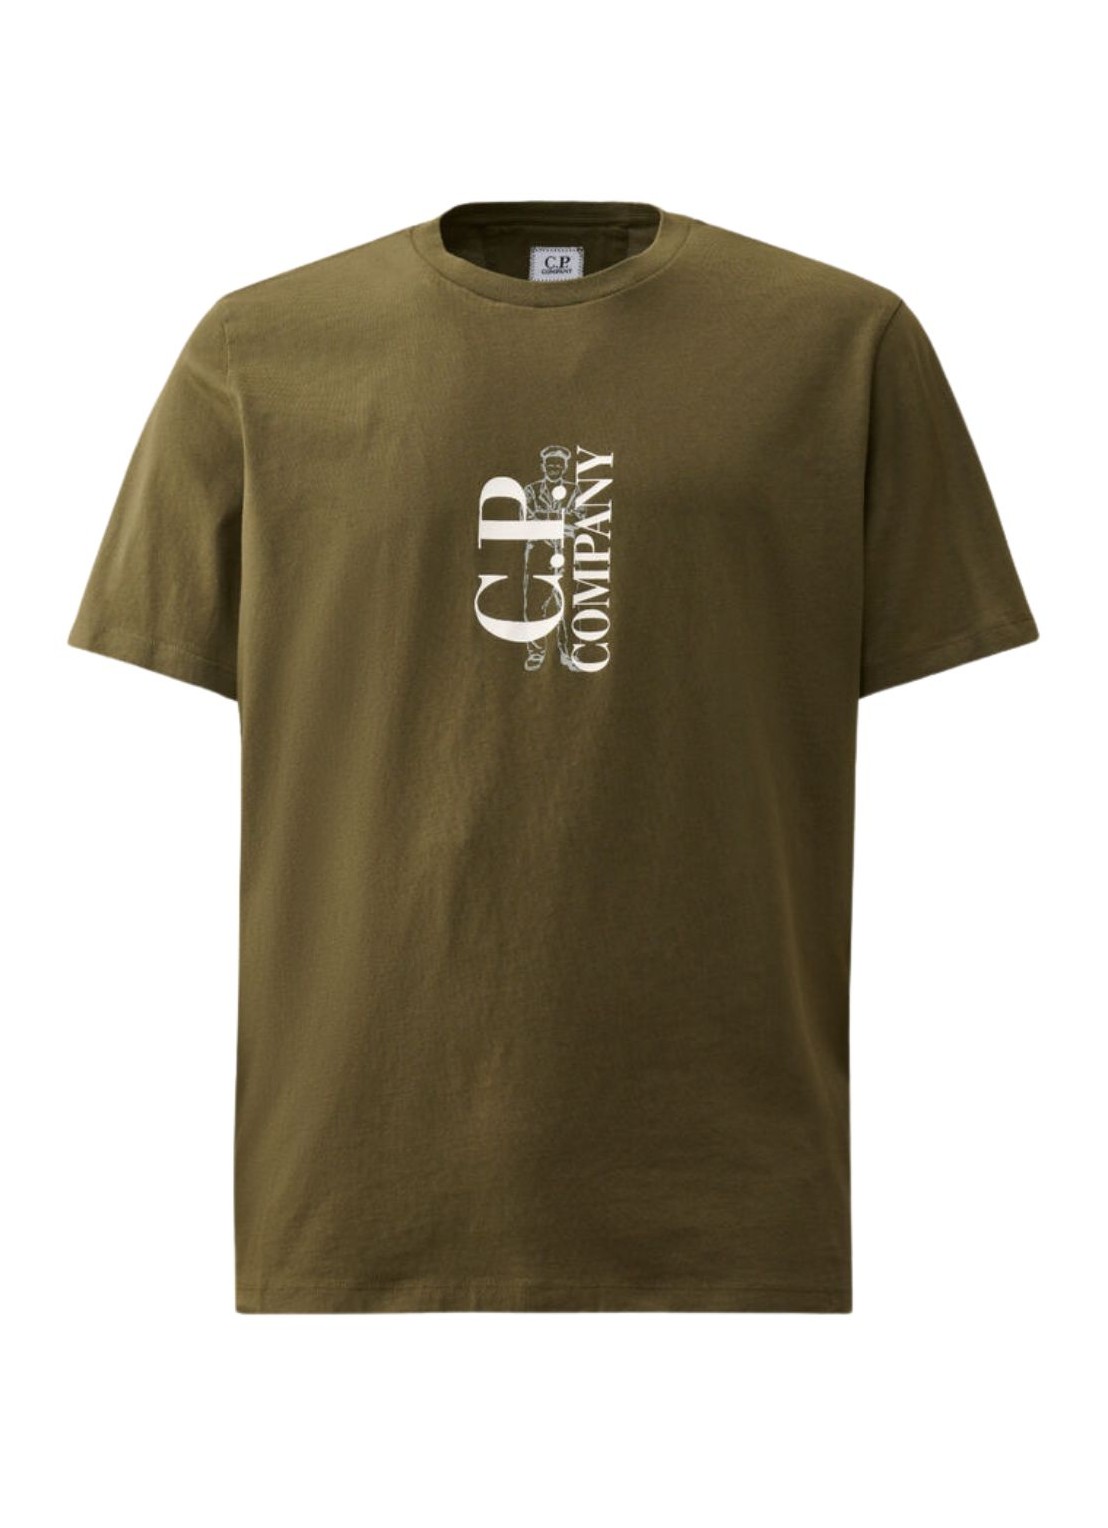 Camiseta c.p.company t-shirt man 30/1 jersey british sailor t-shirt 16cmts139a005100w 683 talla XL
 